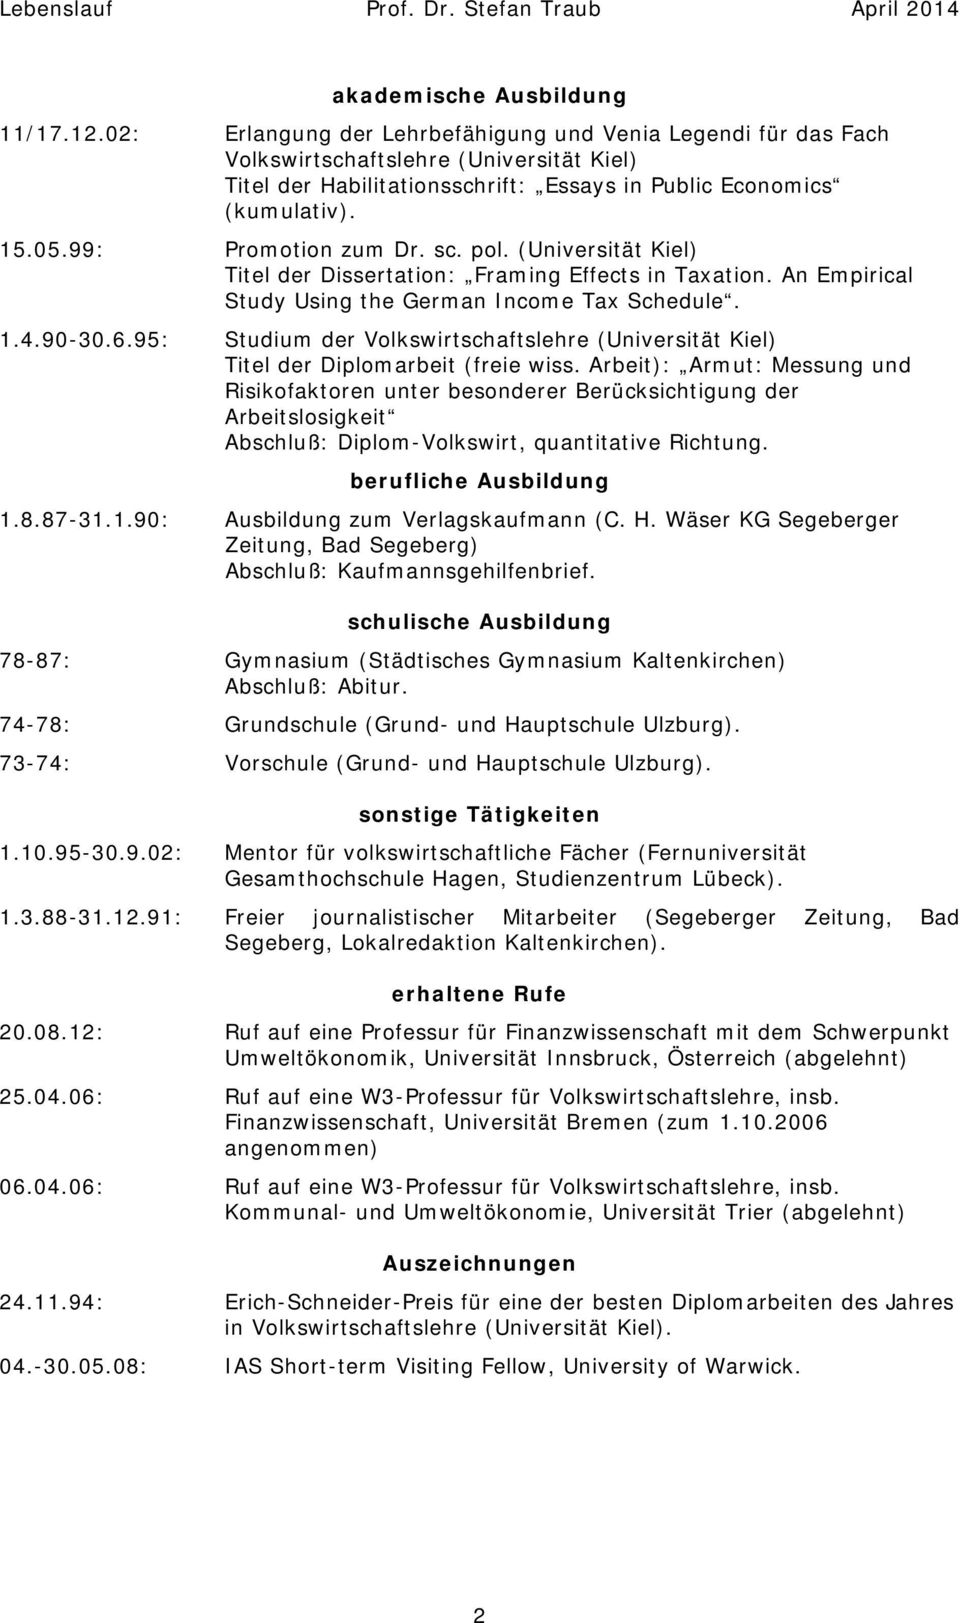 99: Promotion zum Dr. sc. pol. (Universität Kiel) Titel der Dissertation: Framing Effects in Taxation. An Empirical Study Using the German Income Tax Schedule. 1.4.90-30.6.